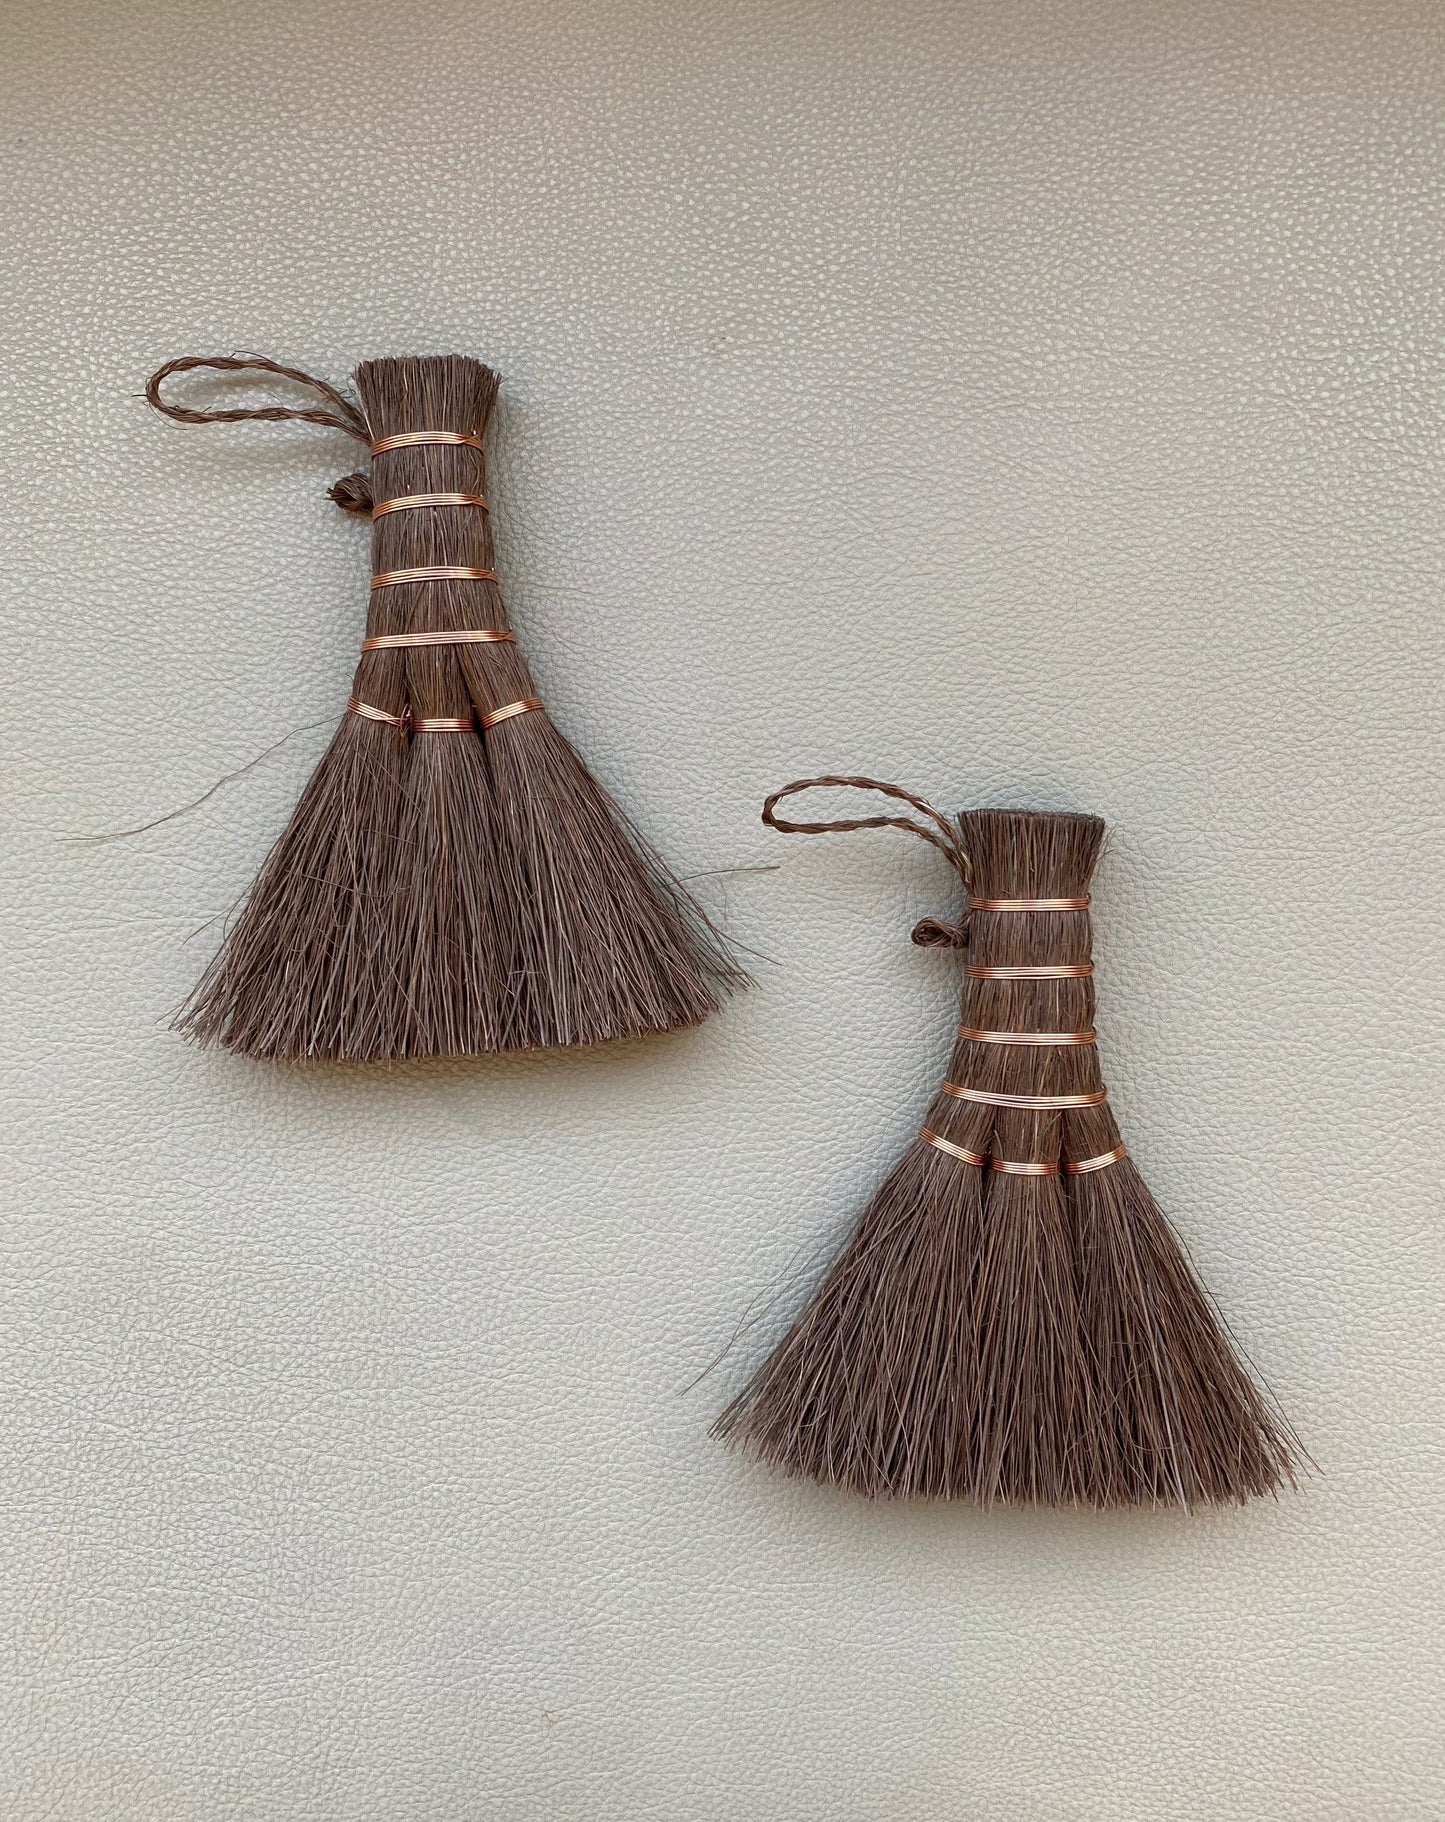 Coconut Mini Broom